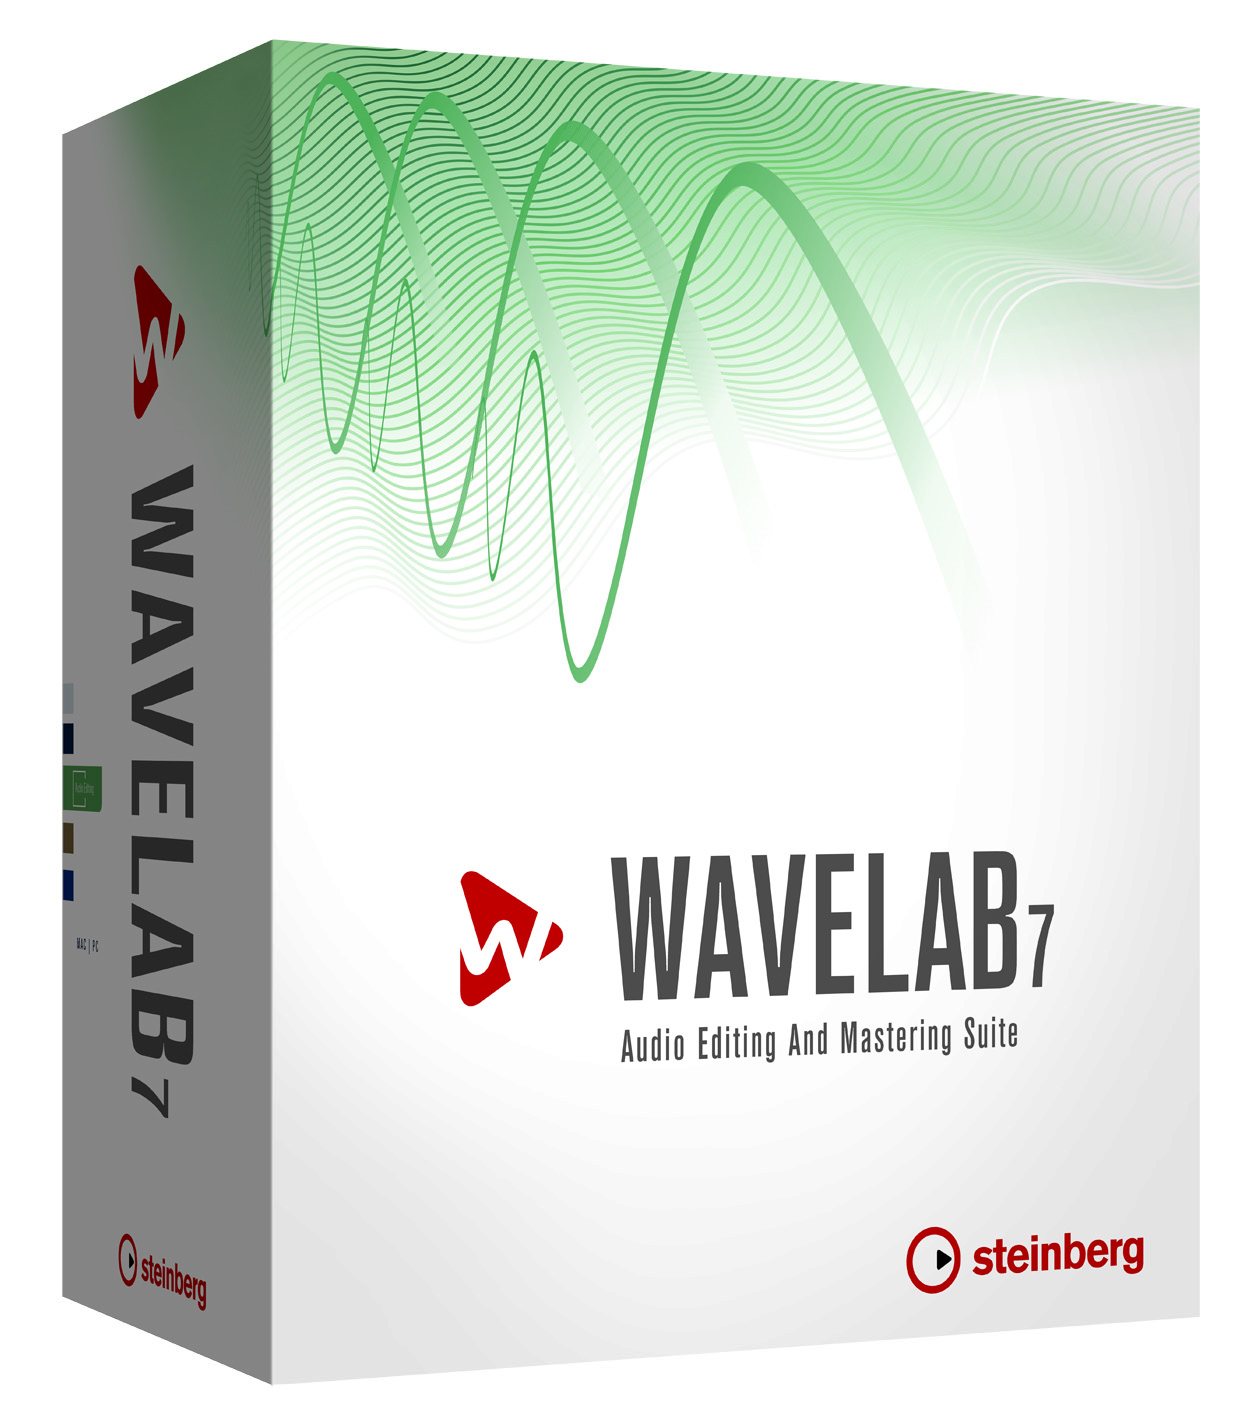 wavelab 7 full crack